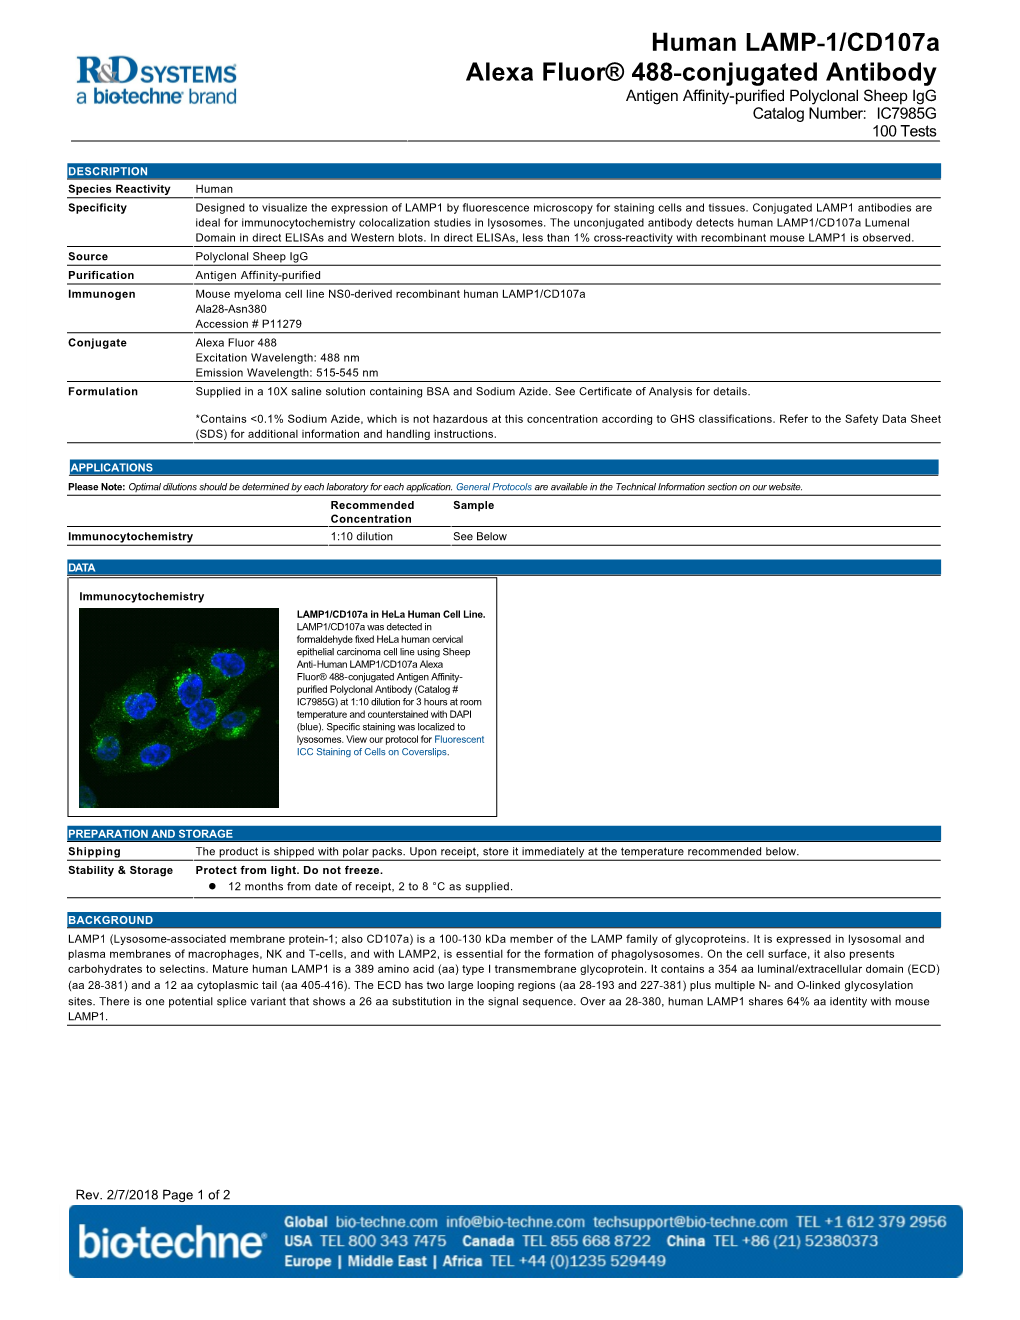 Human LAMP-1/Cd107a Alexa Fluor® 488-Conjugated Antibody